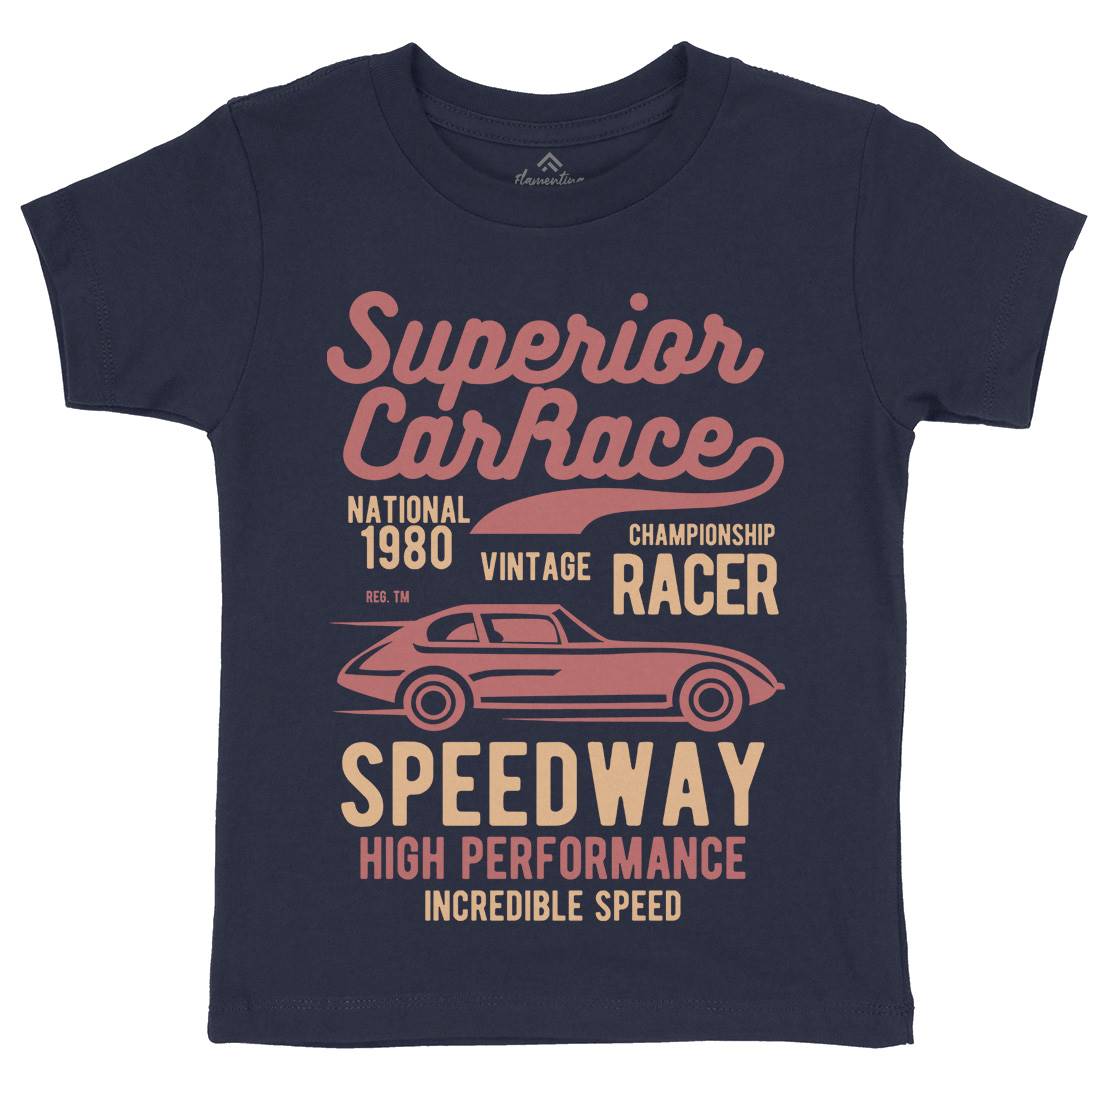 Superior Car Race Kids Crew Neck T-Shirt Cars B456